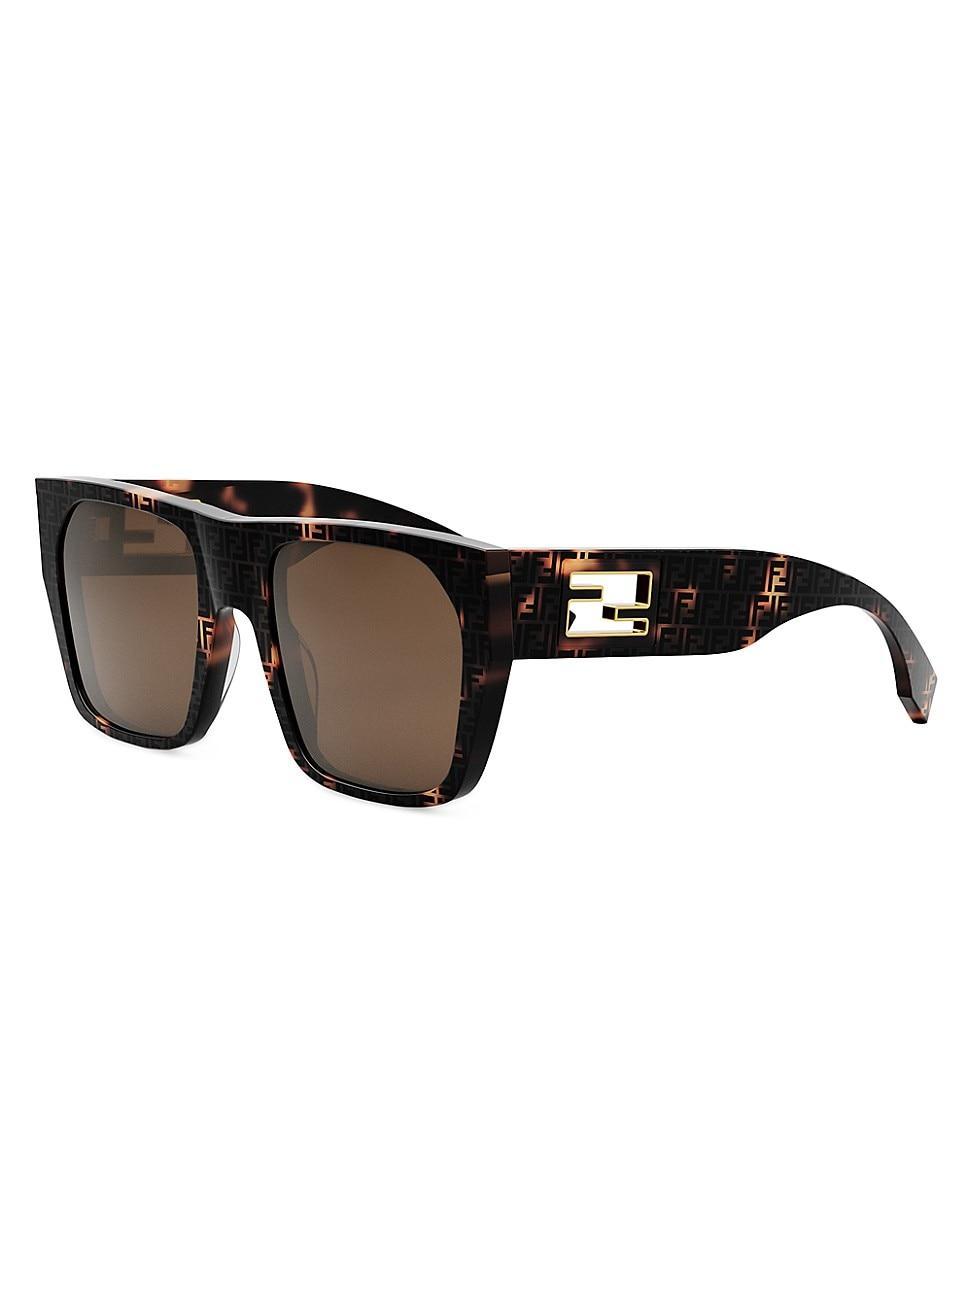 Fendi Baguette 54mm Square Sunglasses Product Image